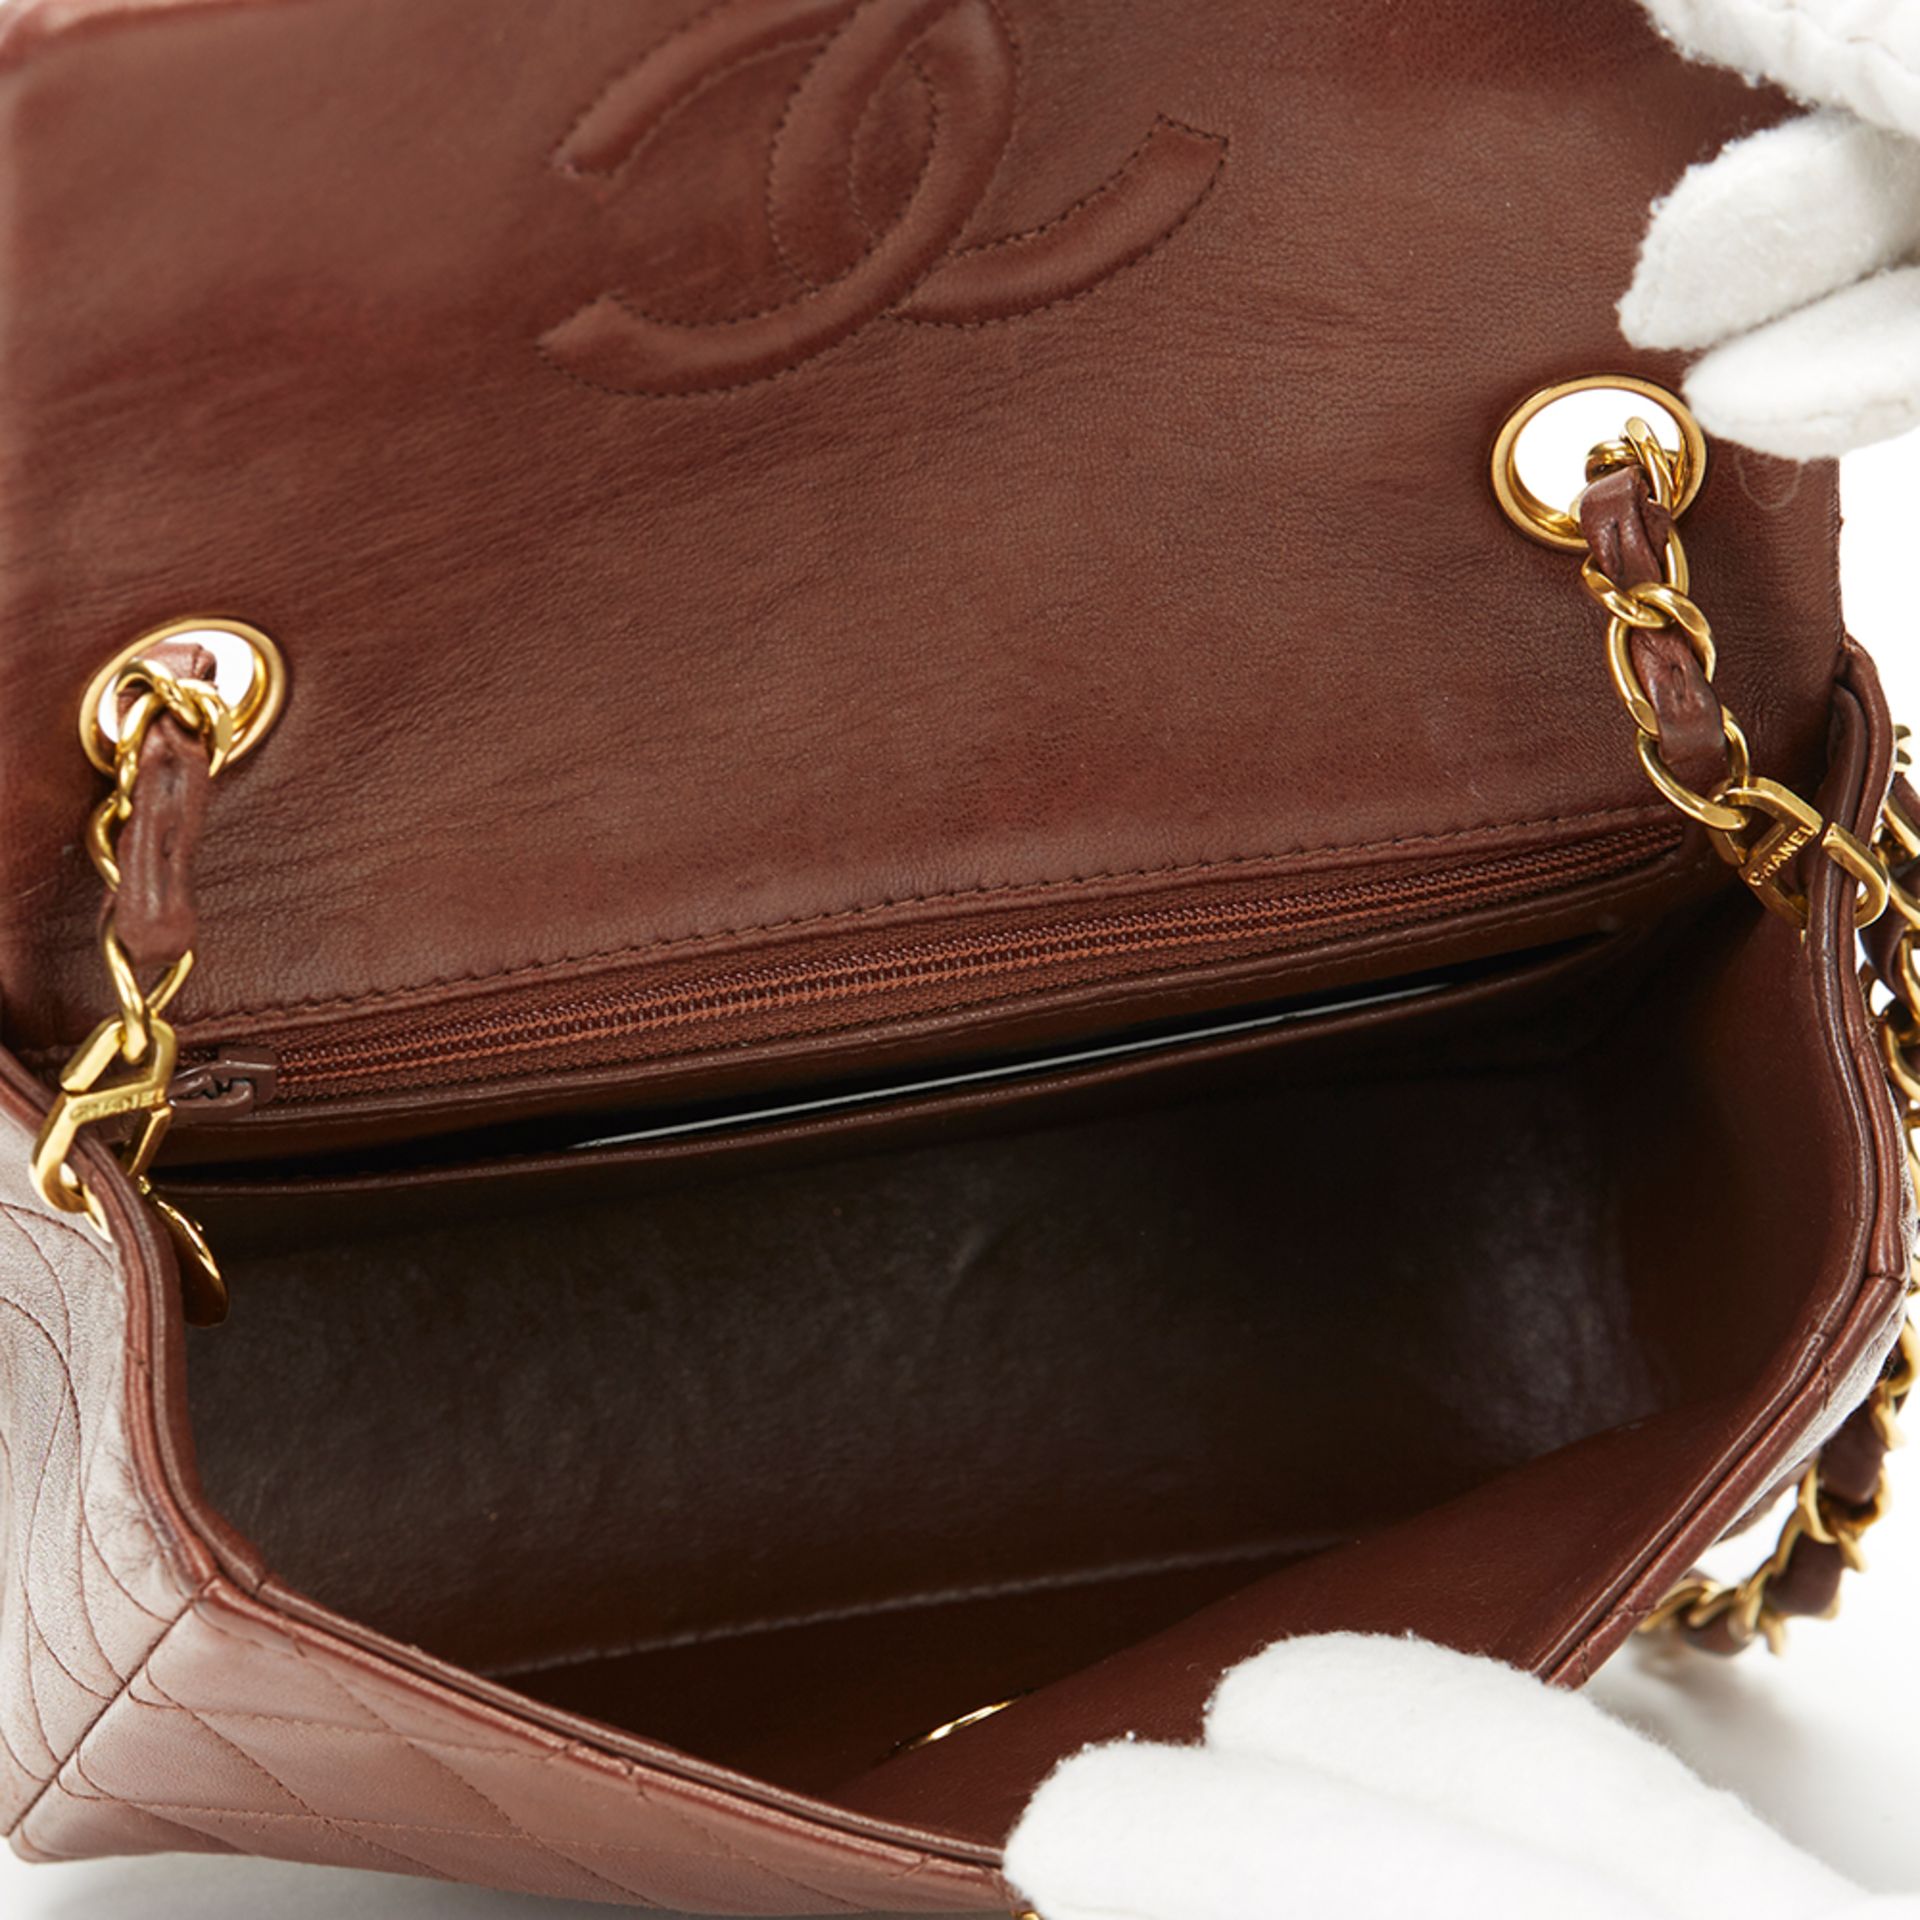 Chanel Mini Flap Bag - Image 10 of 11